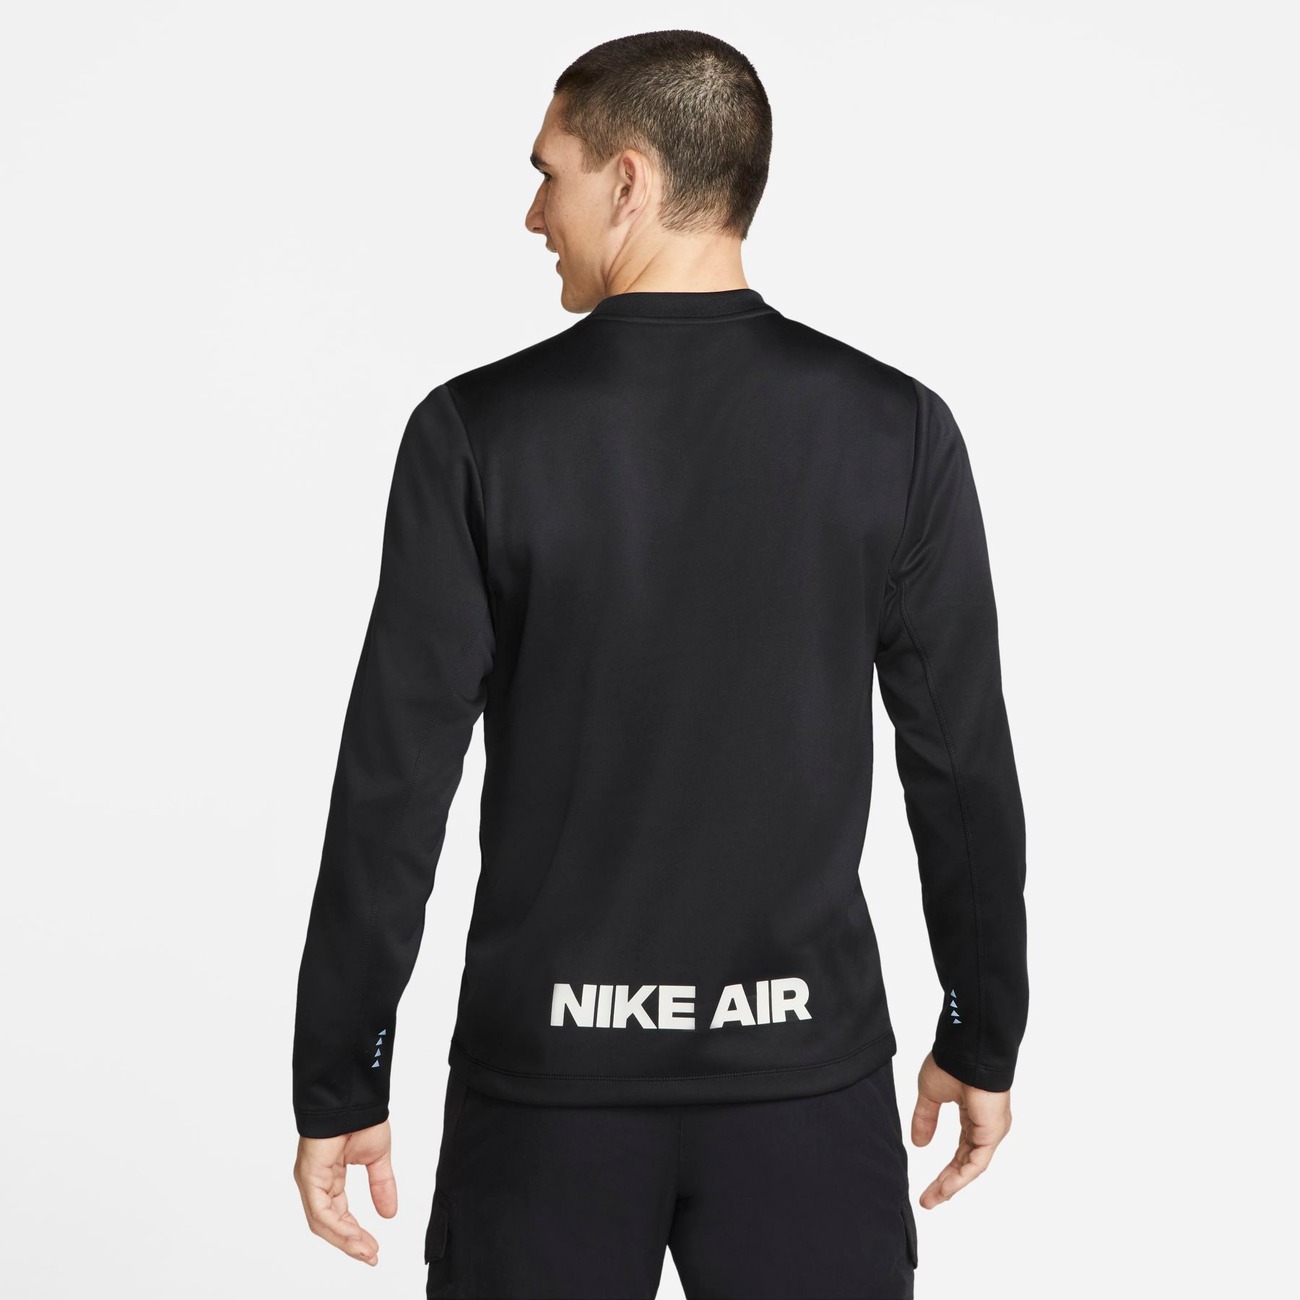 Blusão Nike Air Masculino - Foto 2